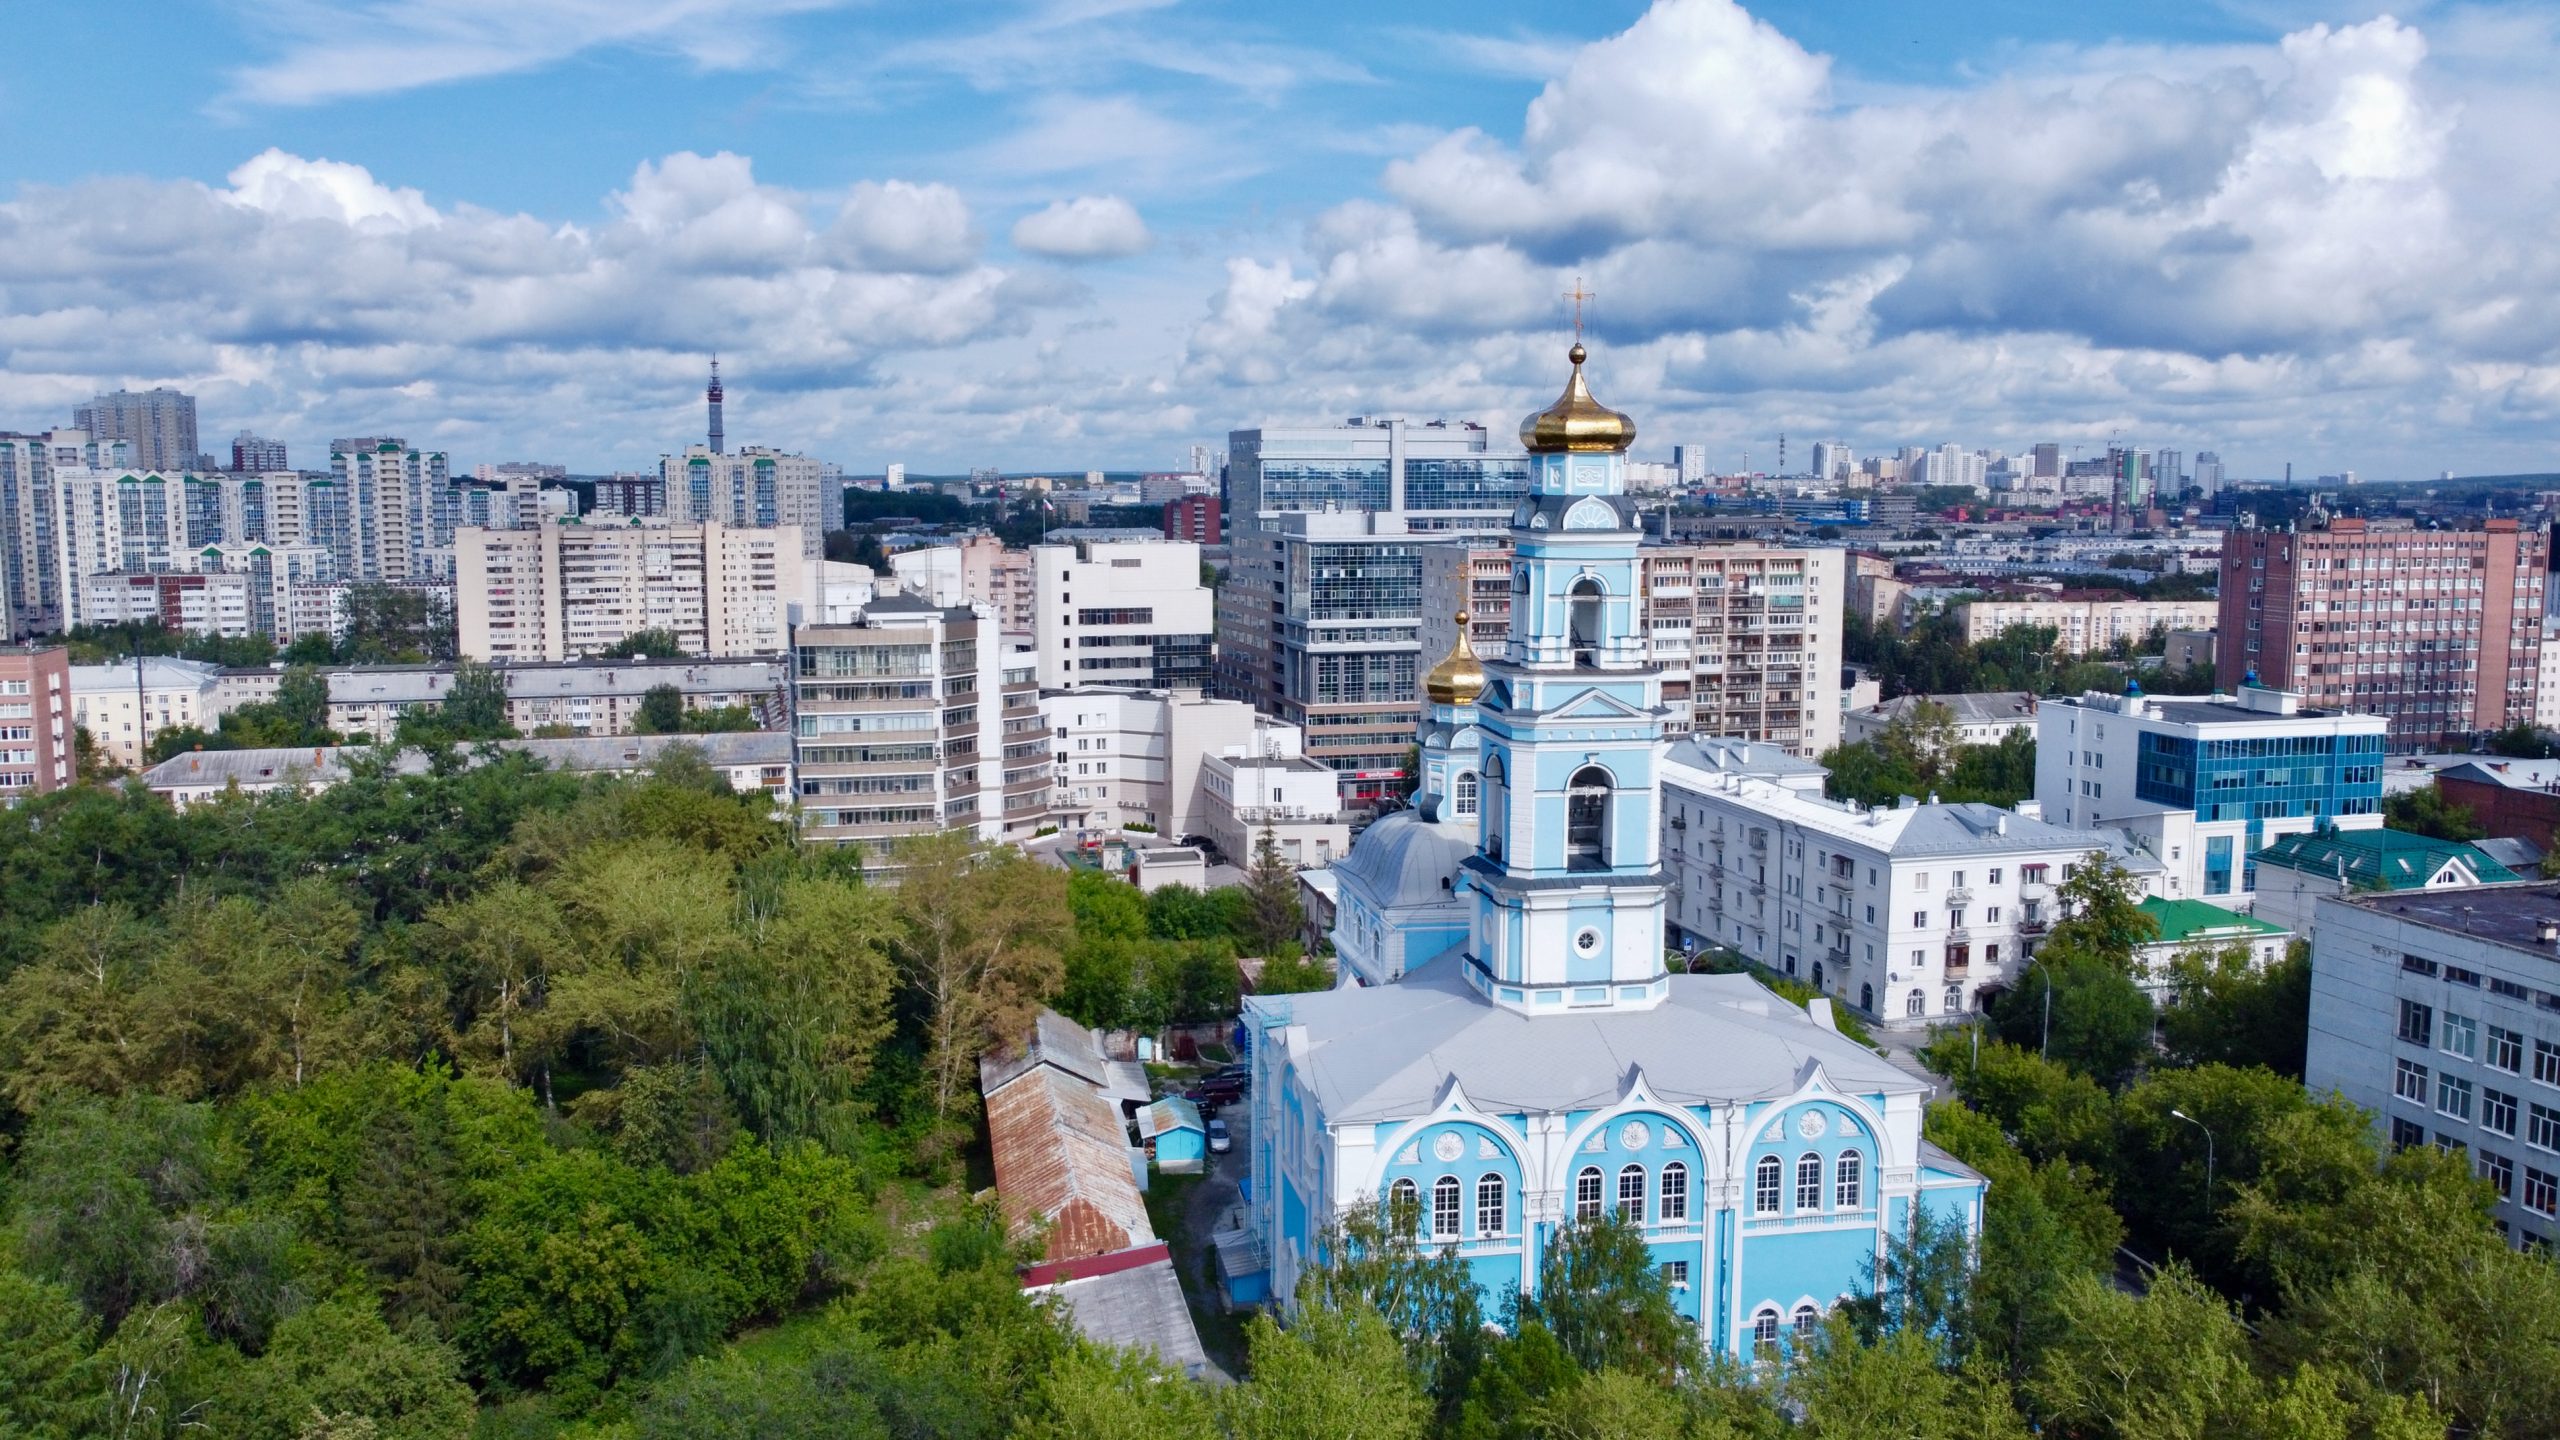 Church of Ascension yekaterinburg